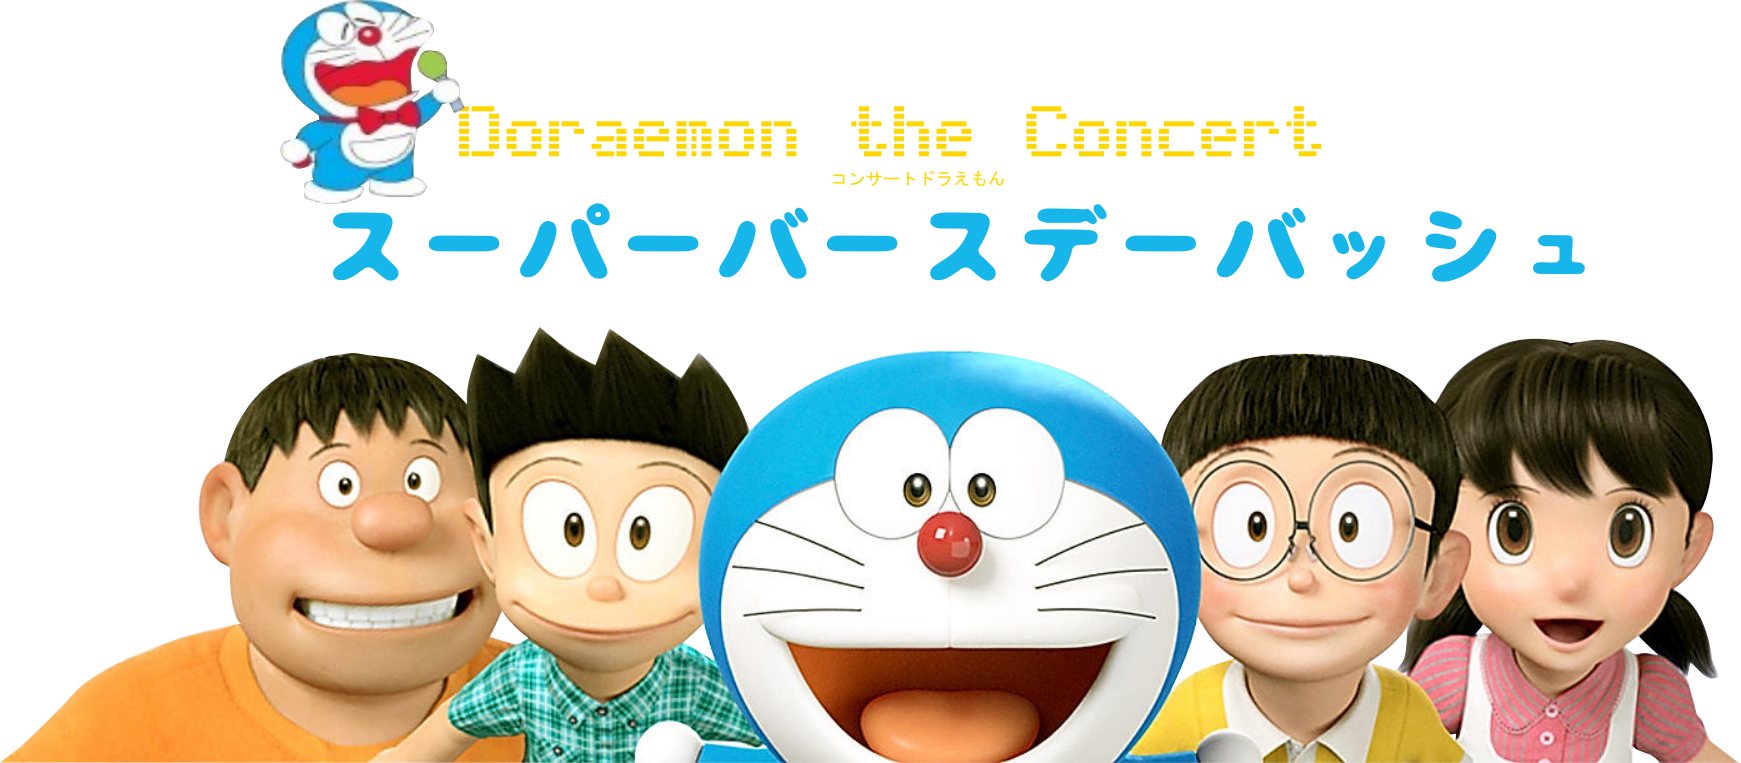 Doraemon PNG Pic Background